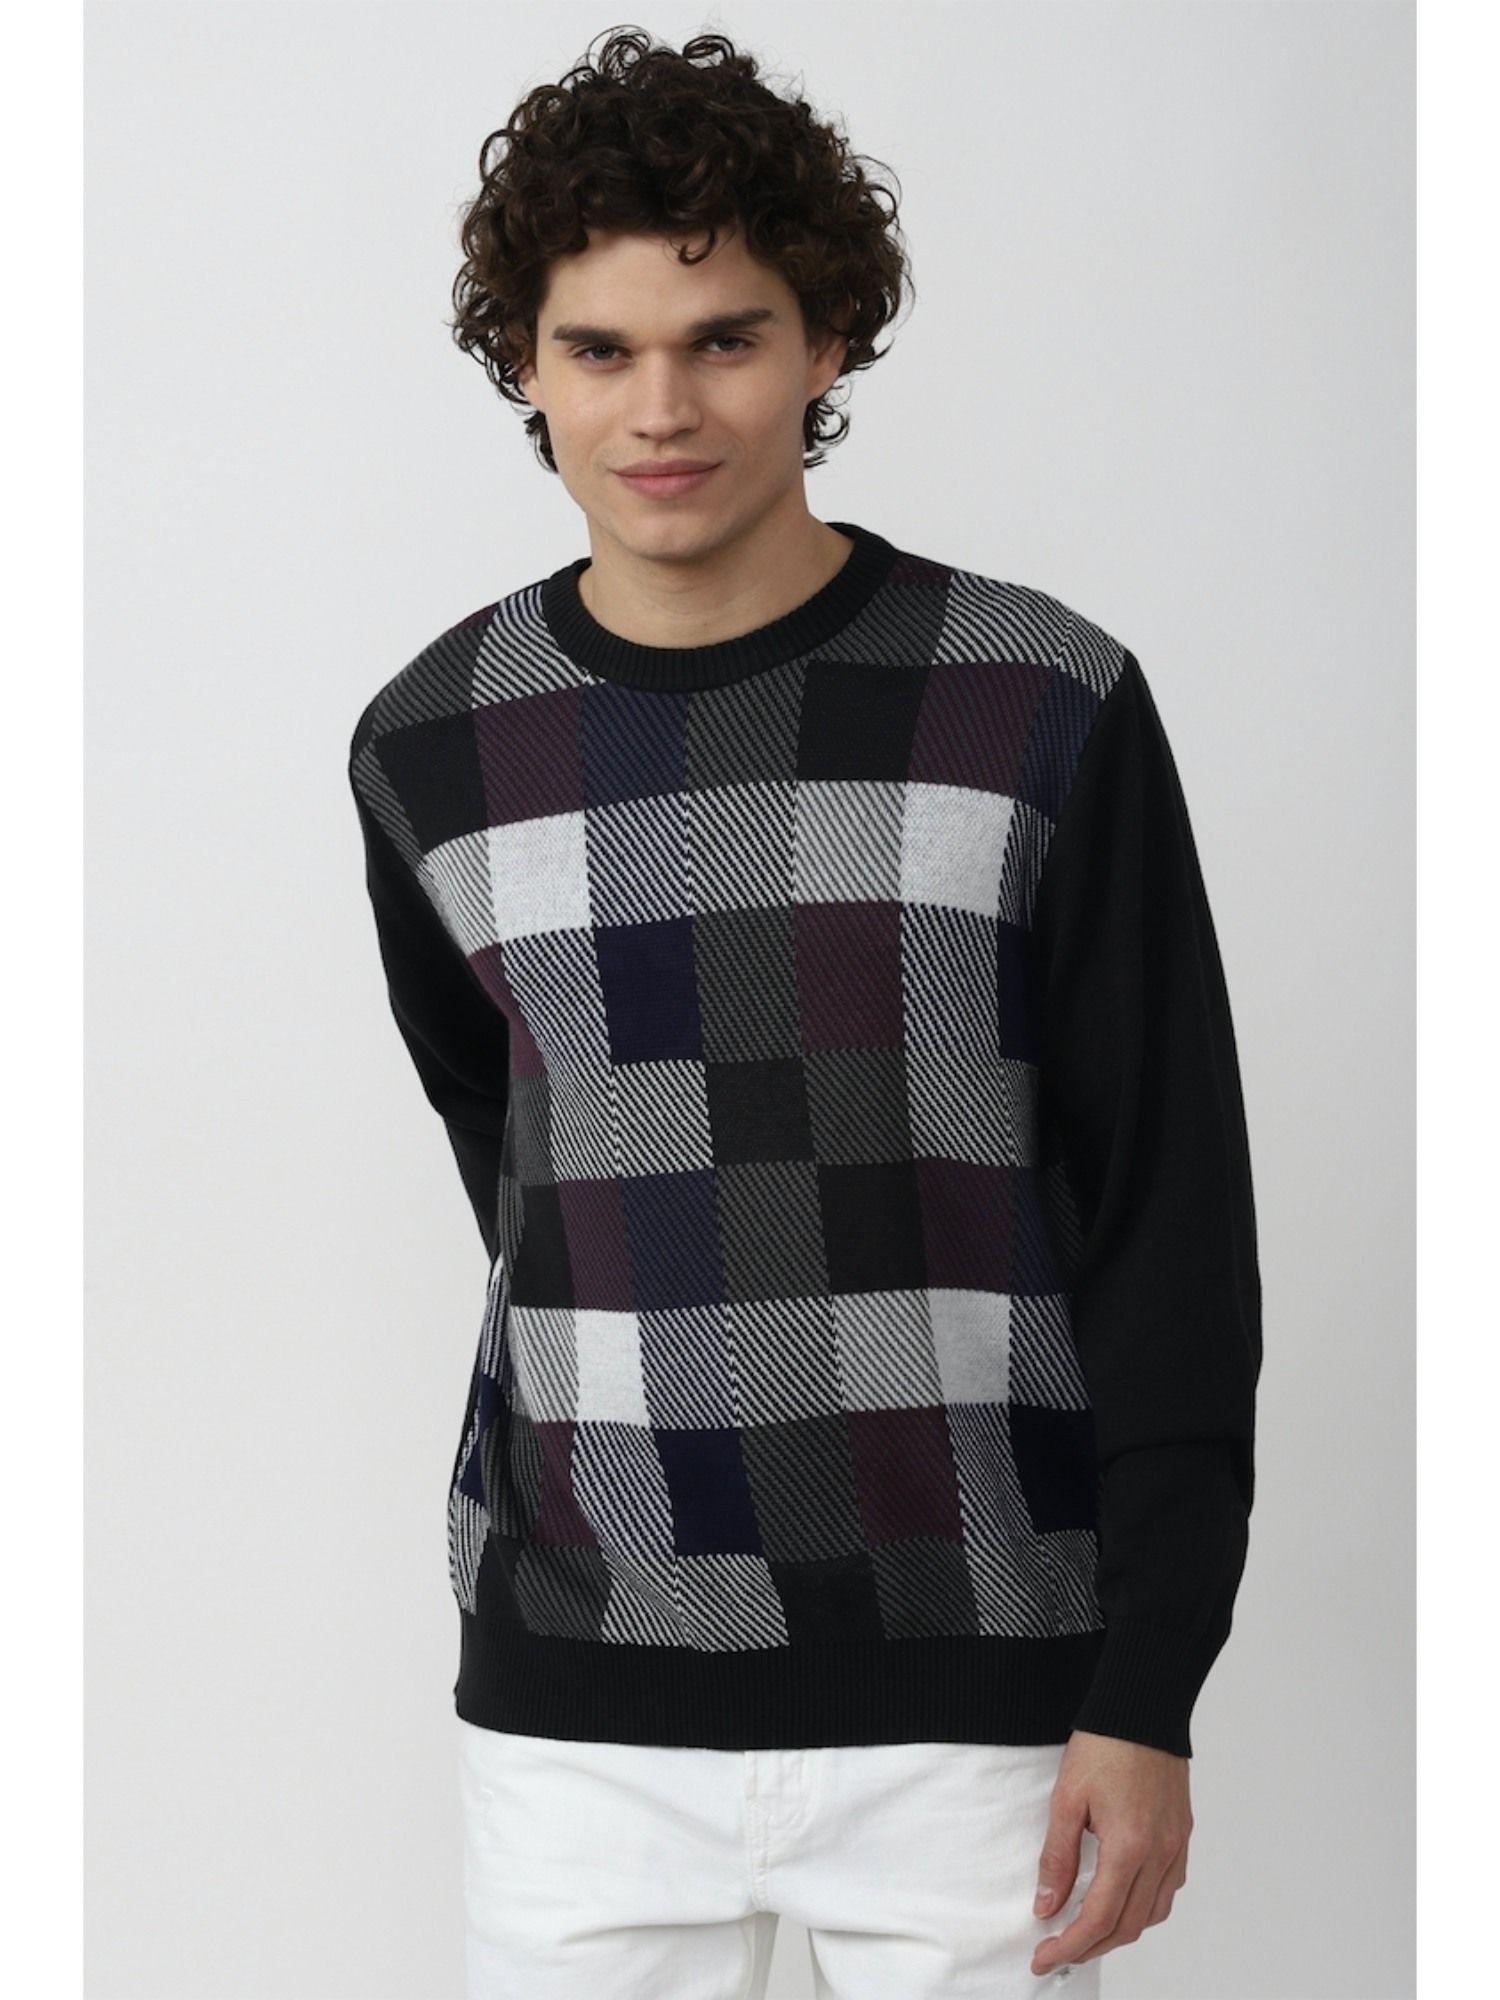 check-black-check-sweater-tops